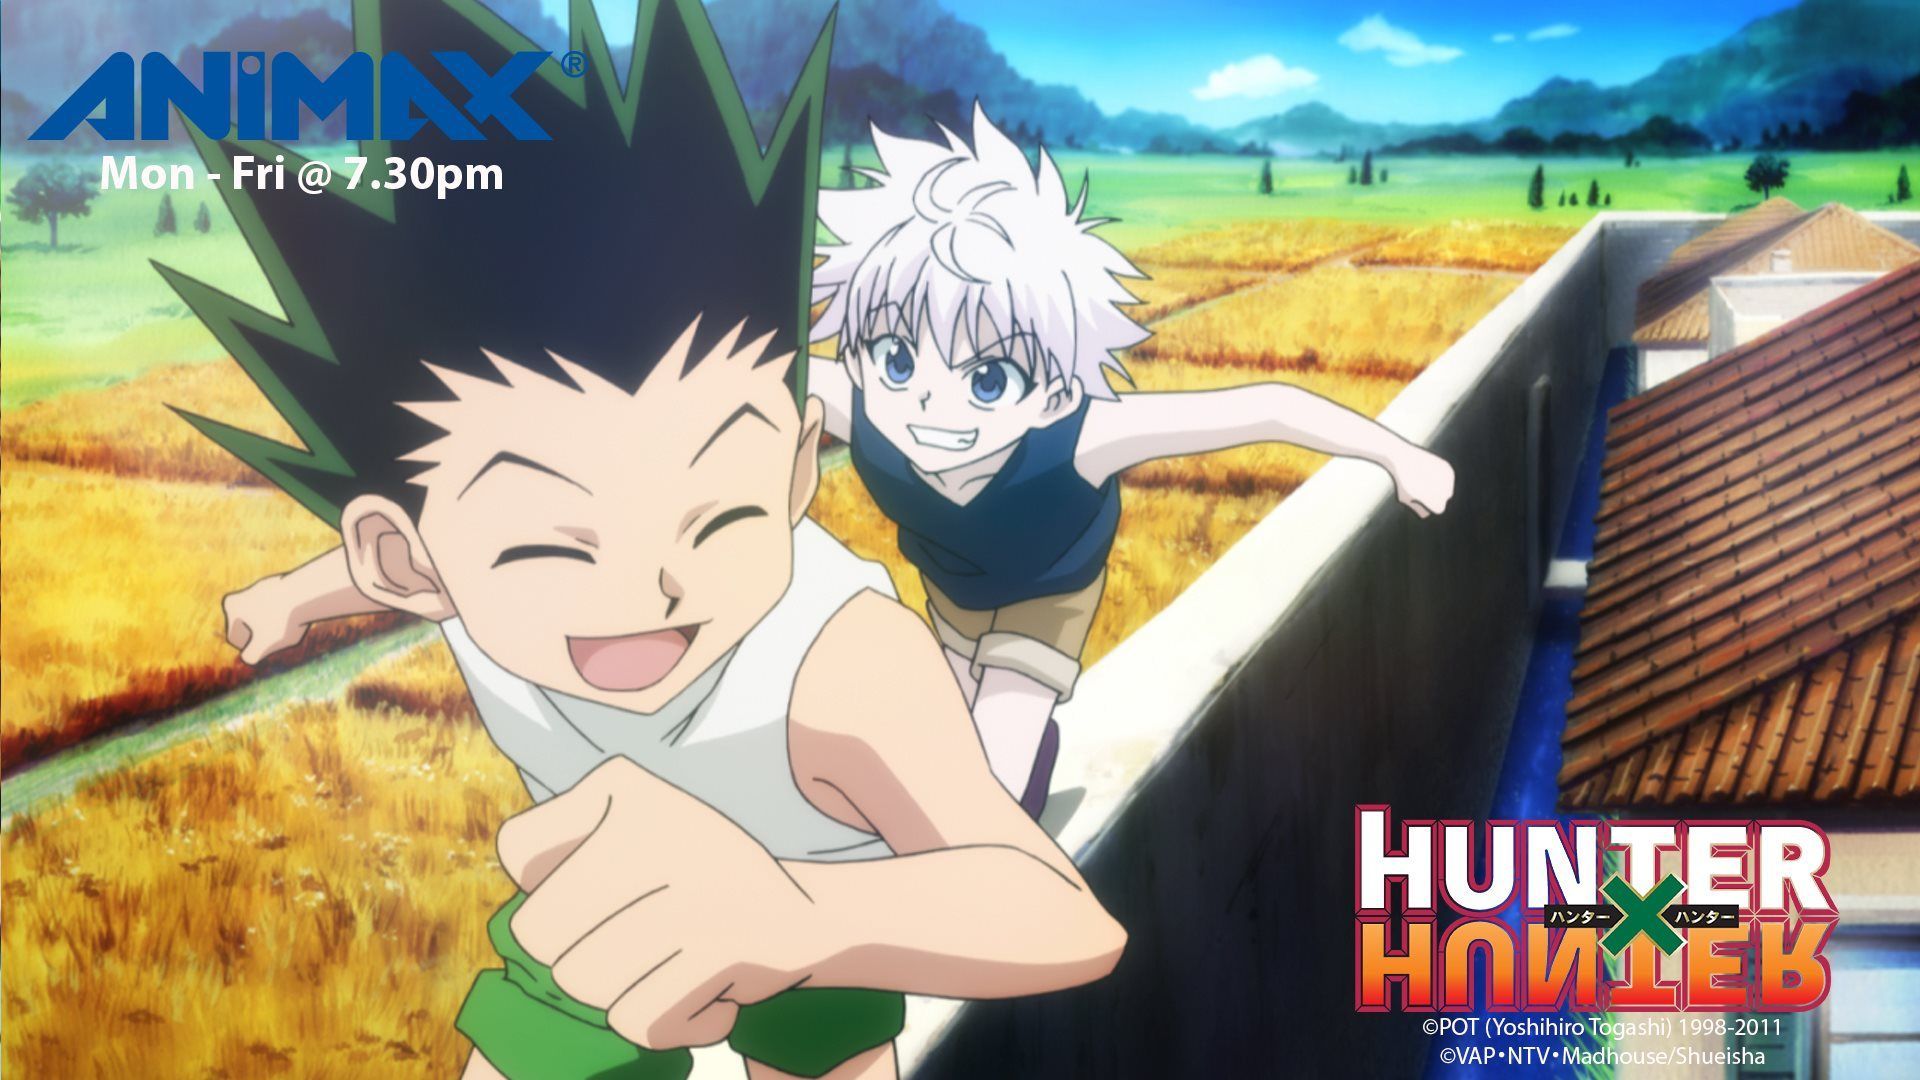 Hunter X Hunter Anime Gon And Killua Image Picture HD Wallpaper Background. Hunter x hunter, Hunter anime, Hunter